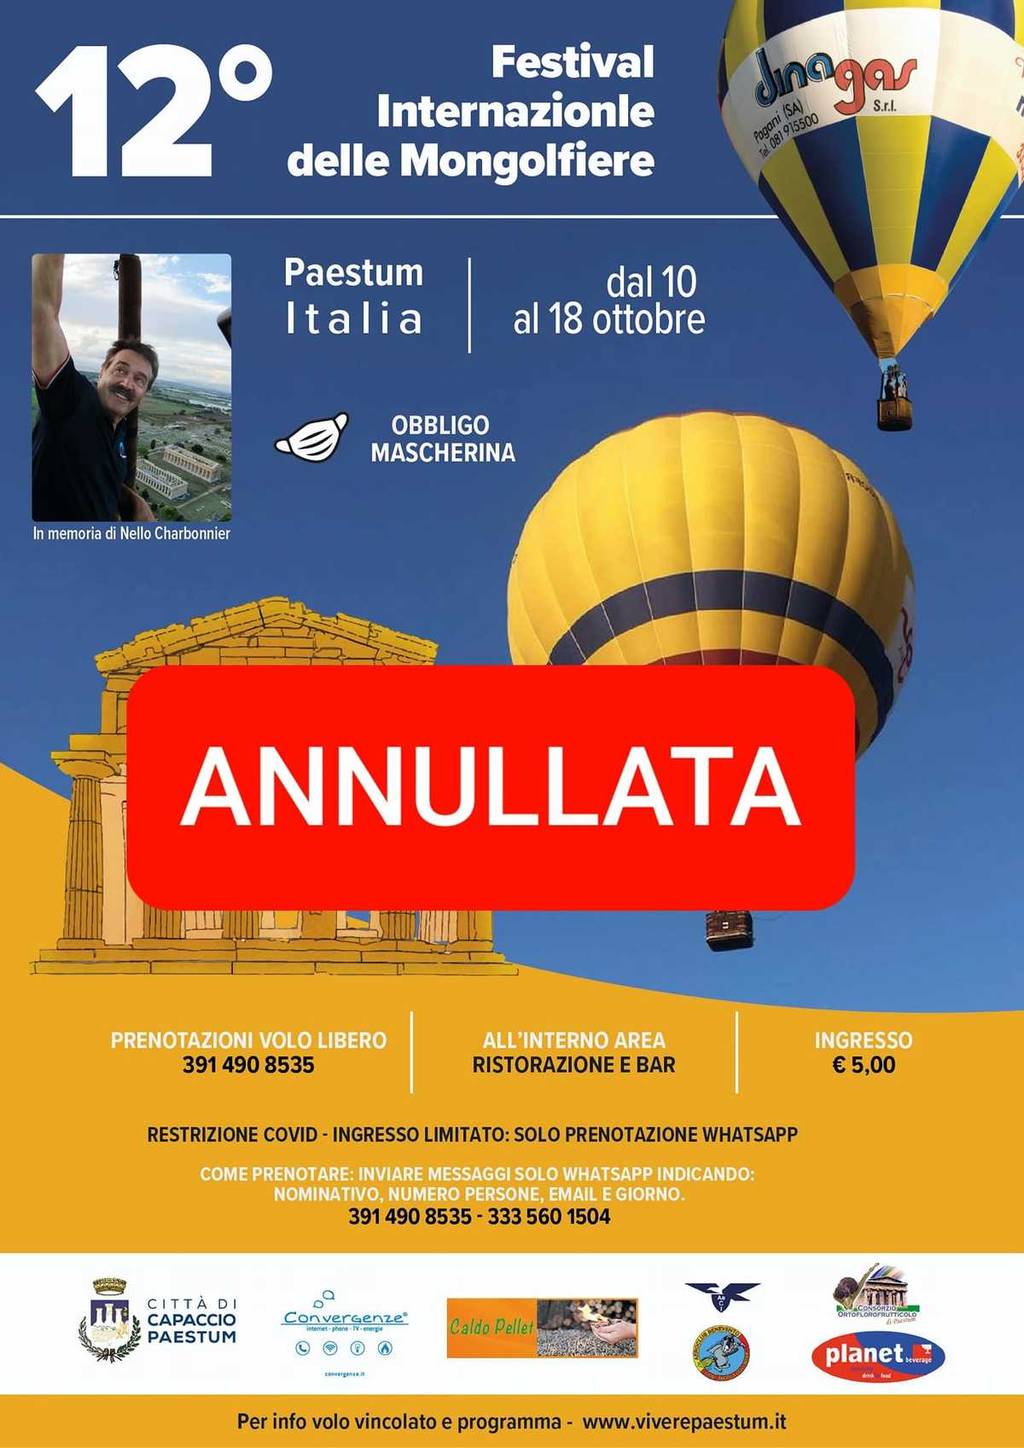 Festival Internazionale Delle Mongolfiere 2020 - Paestum